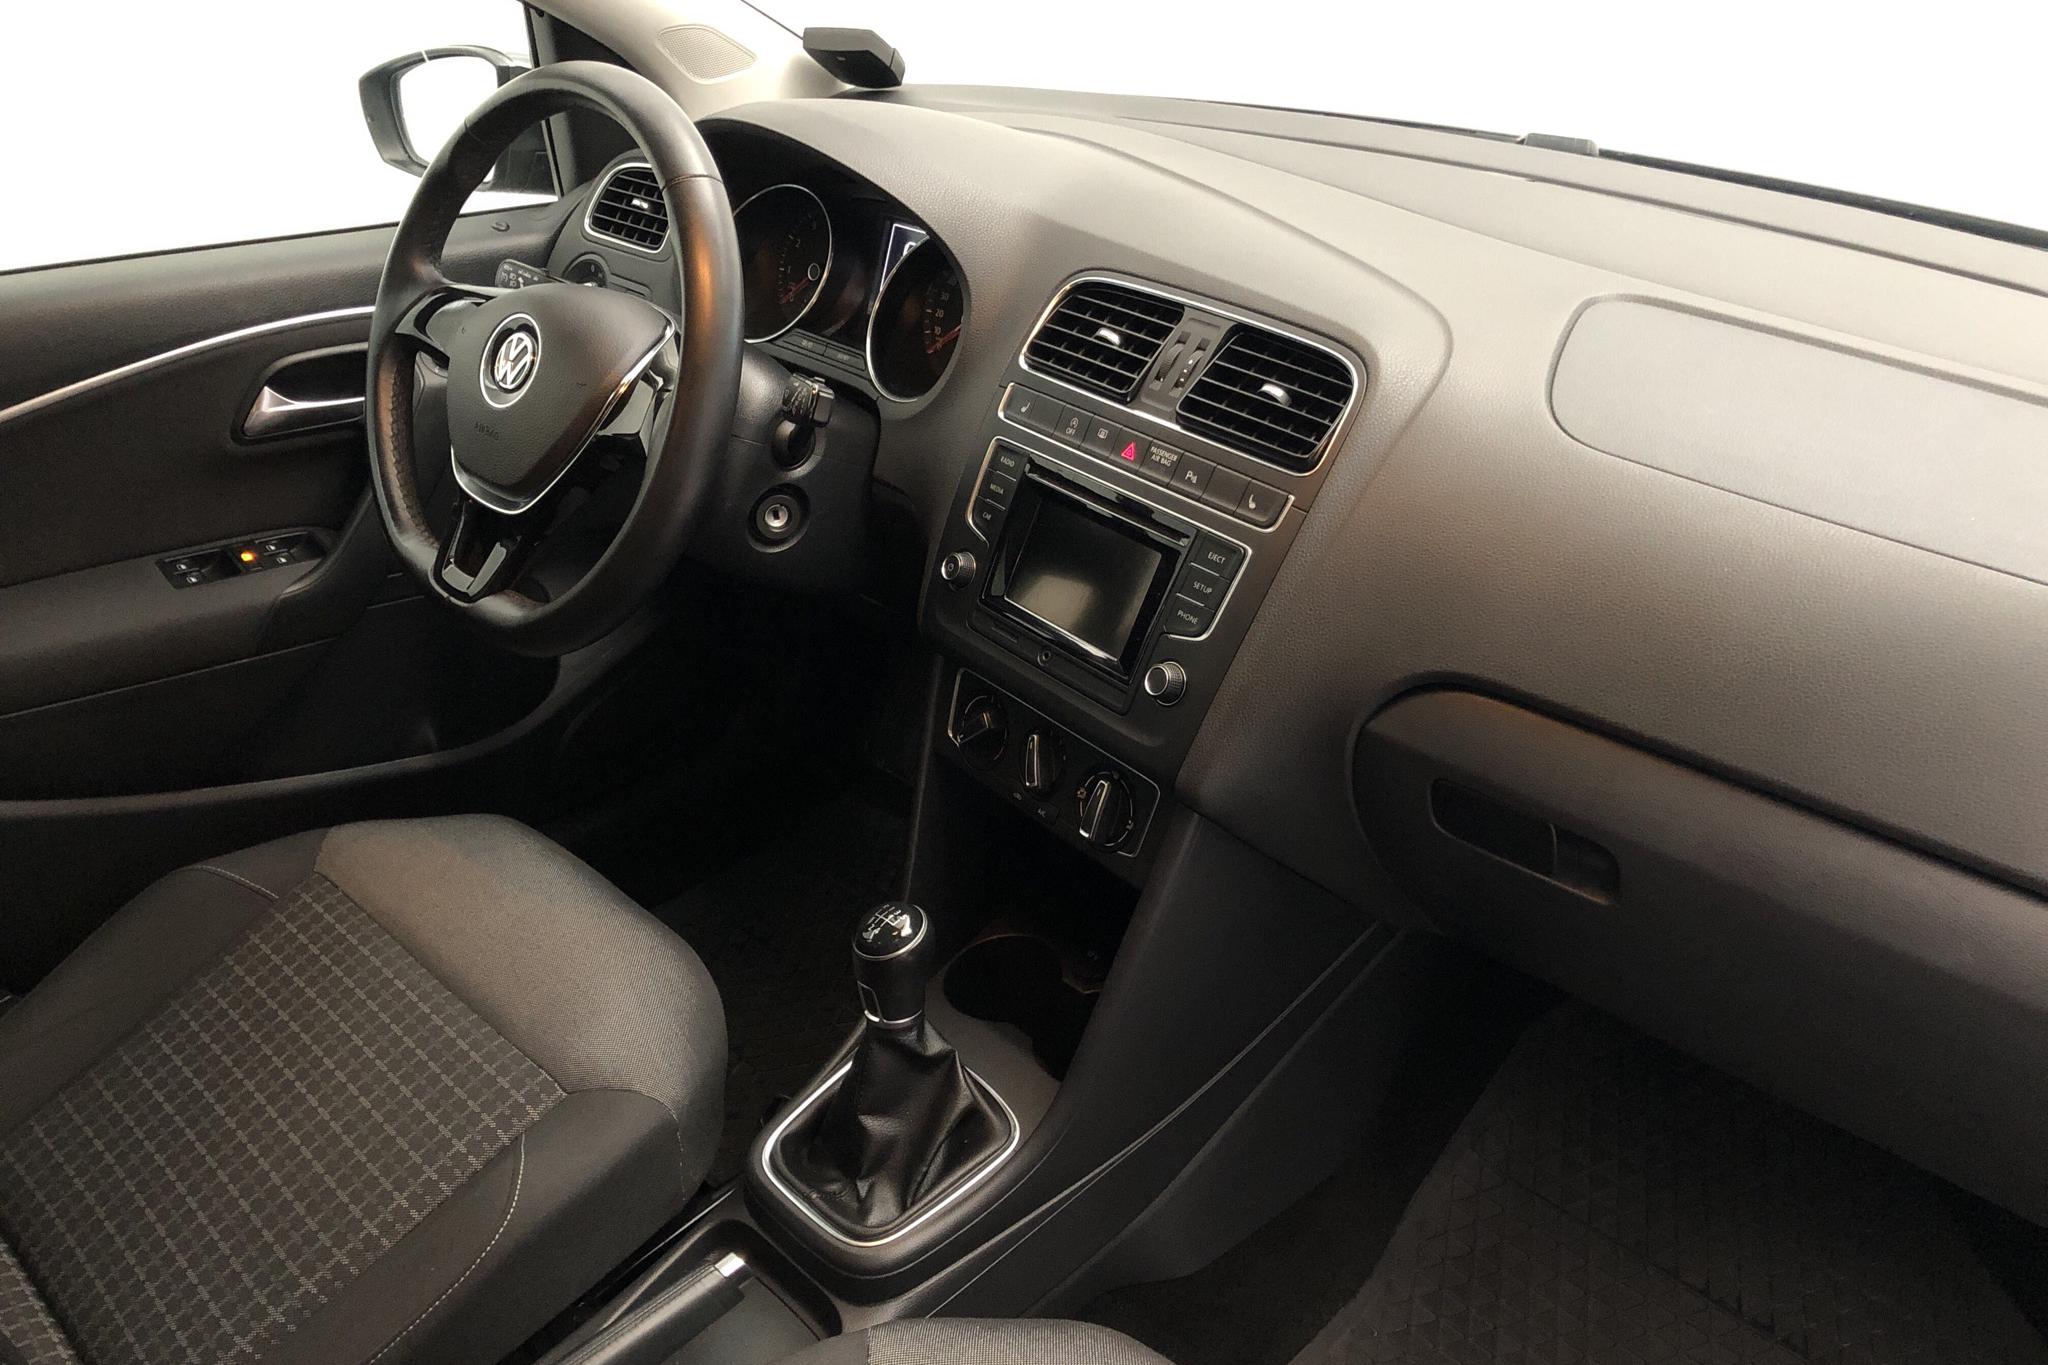 VW Polo 1.2 TSI 5dr (90hk) - 6 190 mil - Manuell - Dark Grey - 2016